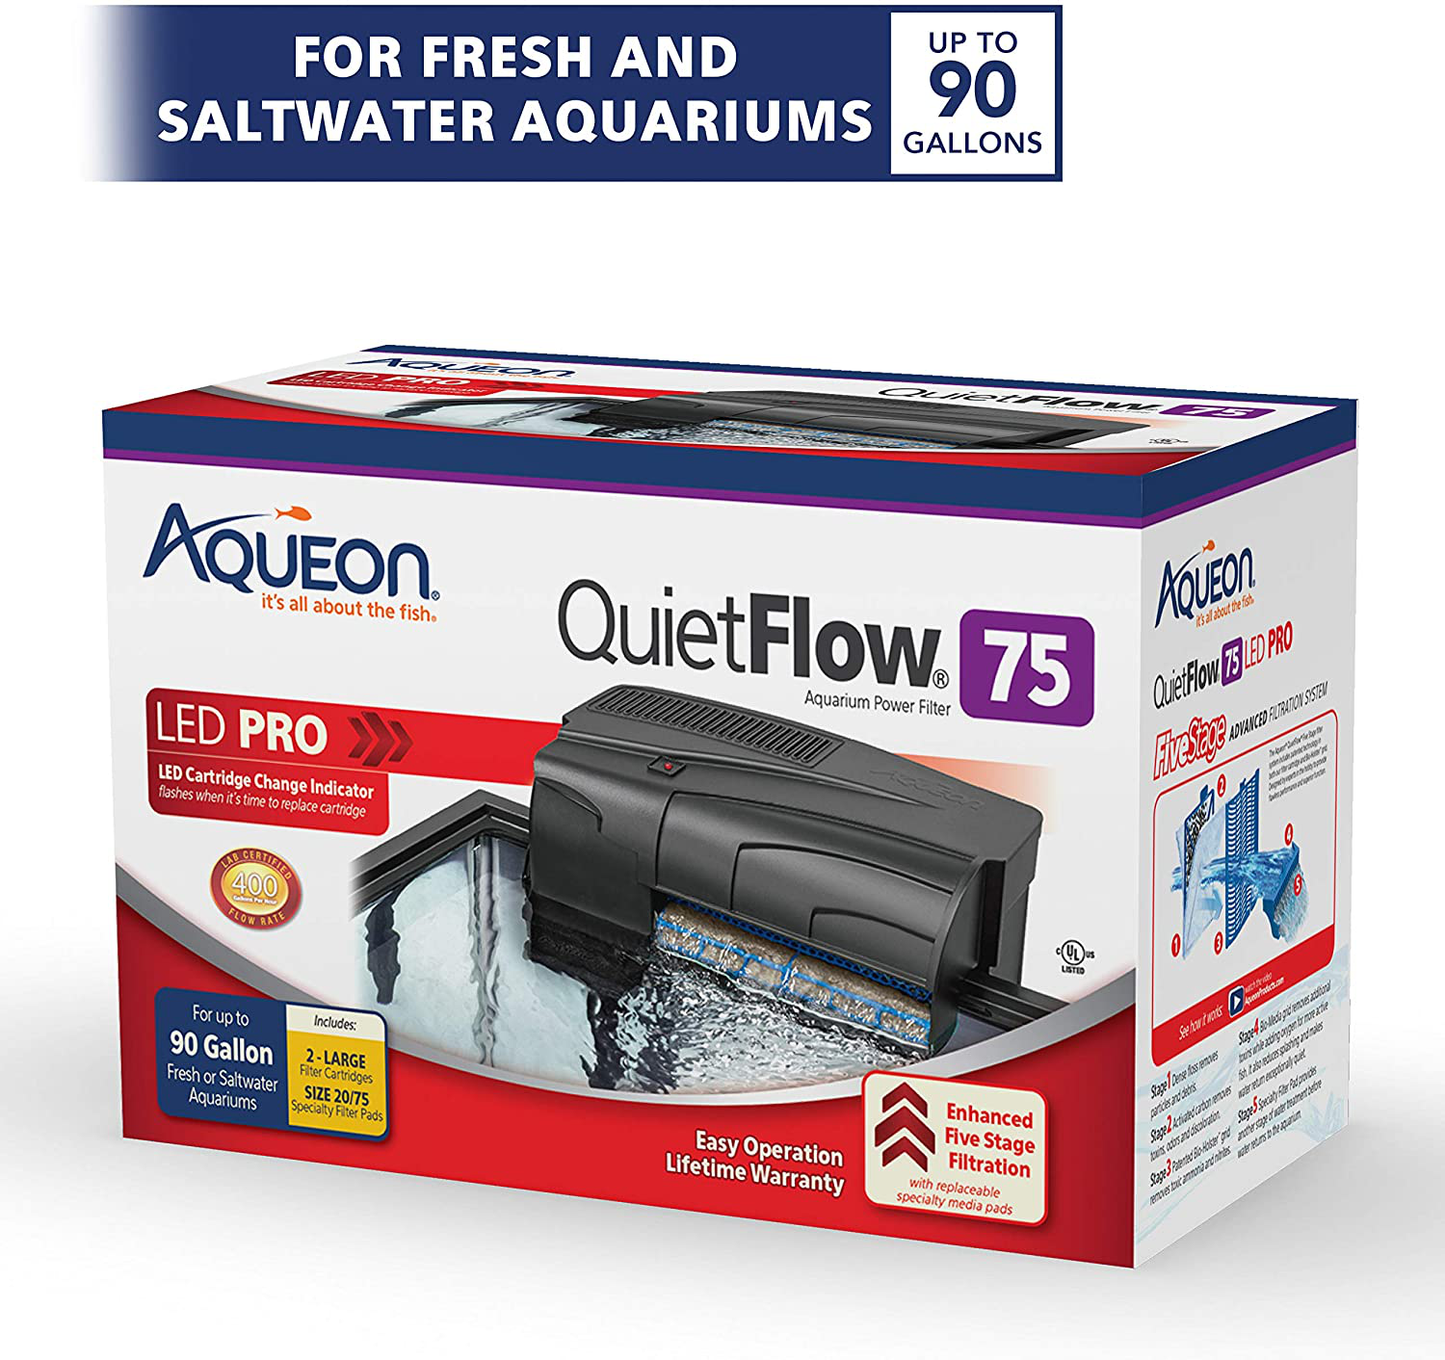 Aqueon Quietflow LED PRO Aquarium Power Filter, Size 75